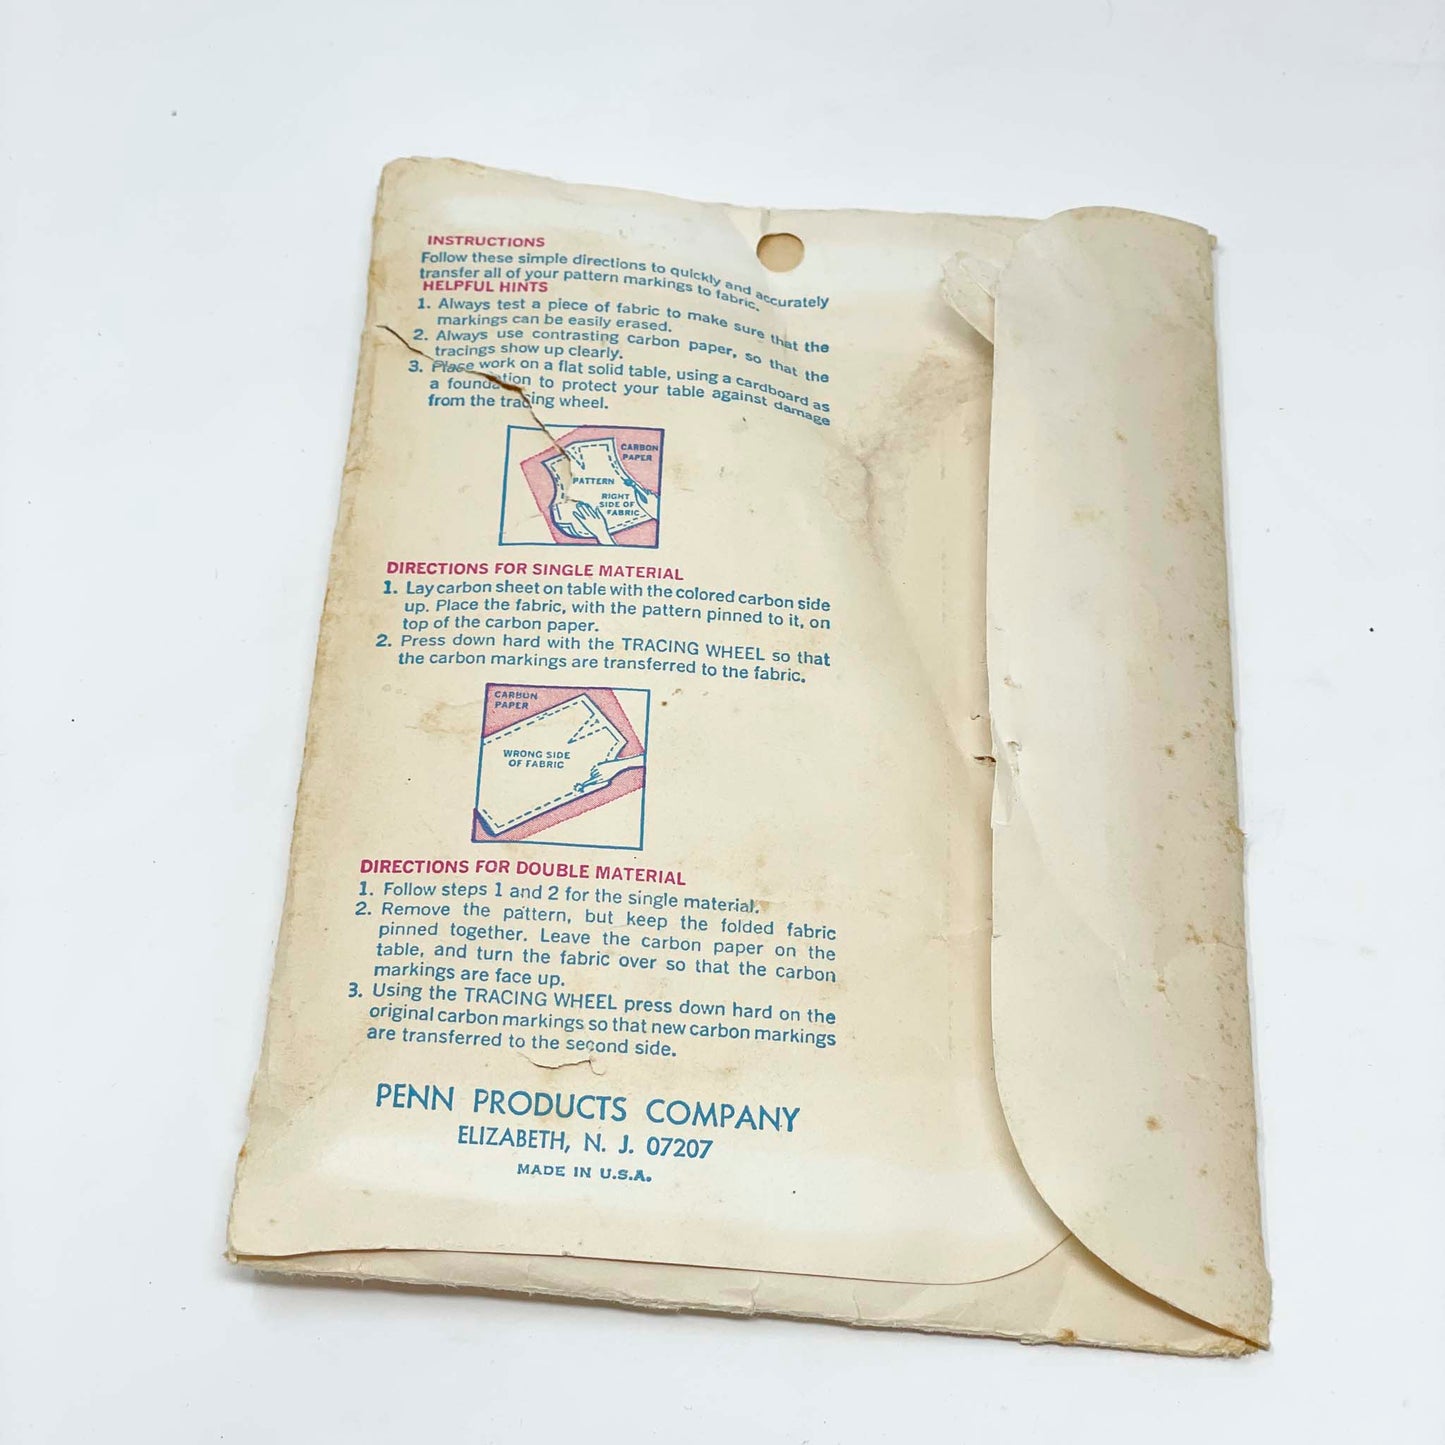 Vintage Penn Dressmakers Carbon Tracing Paper